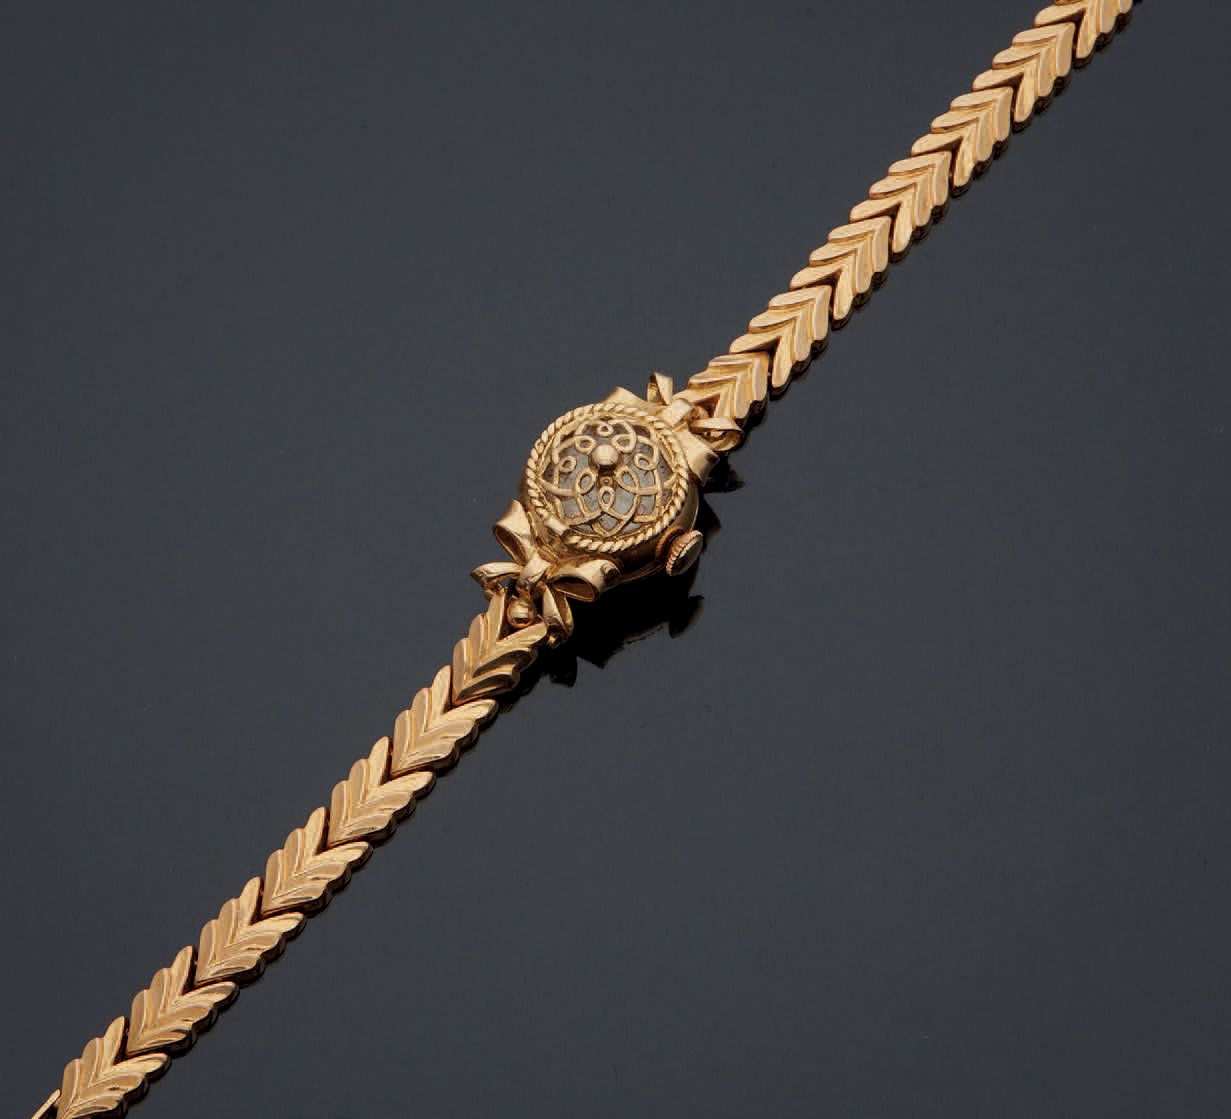 Null 黄金腕表，750毫米，镂空表盖和全金雪佛龙表带，1960年代。机械机芯。
毛重：19.7g；
净重：16.6g。
在巴黎的一个Au Nègre案件中。